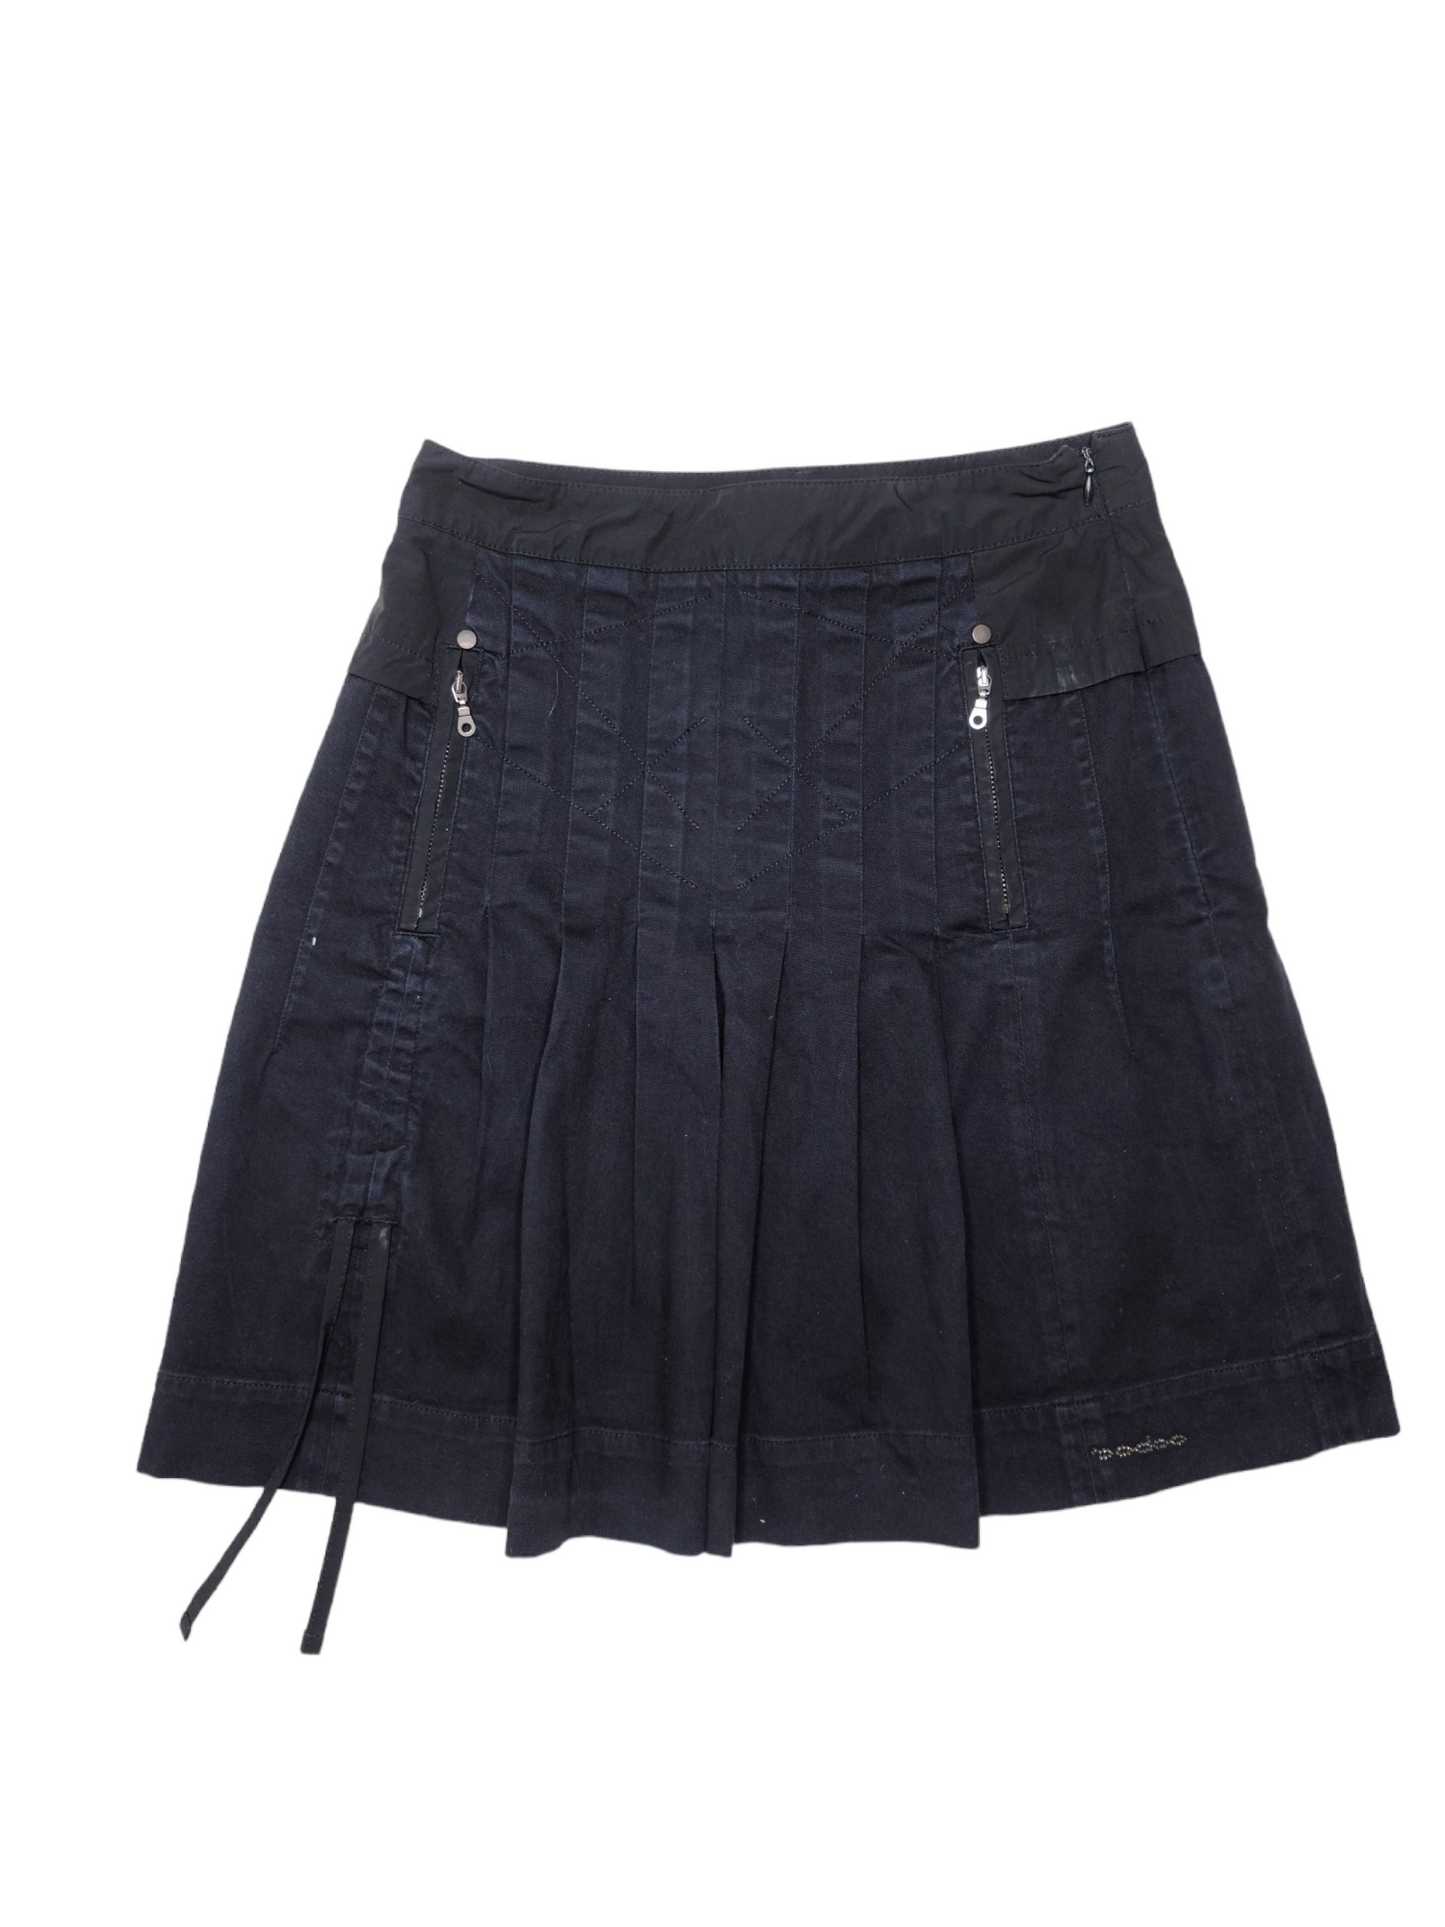 Mini skirt jupe vintage 2000 y2k patineuse plissee emo punk cybery2k techwear 